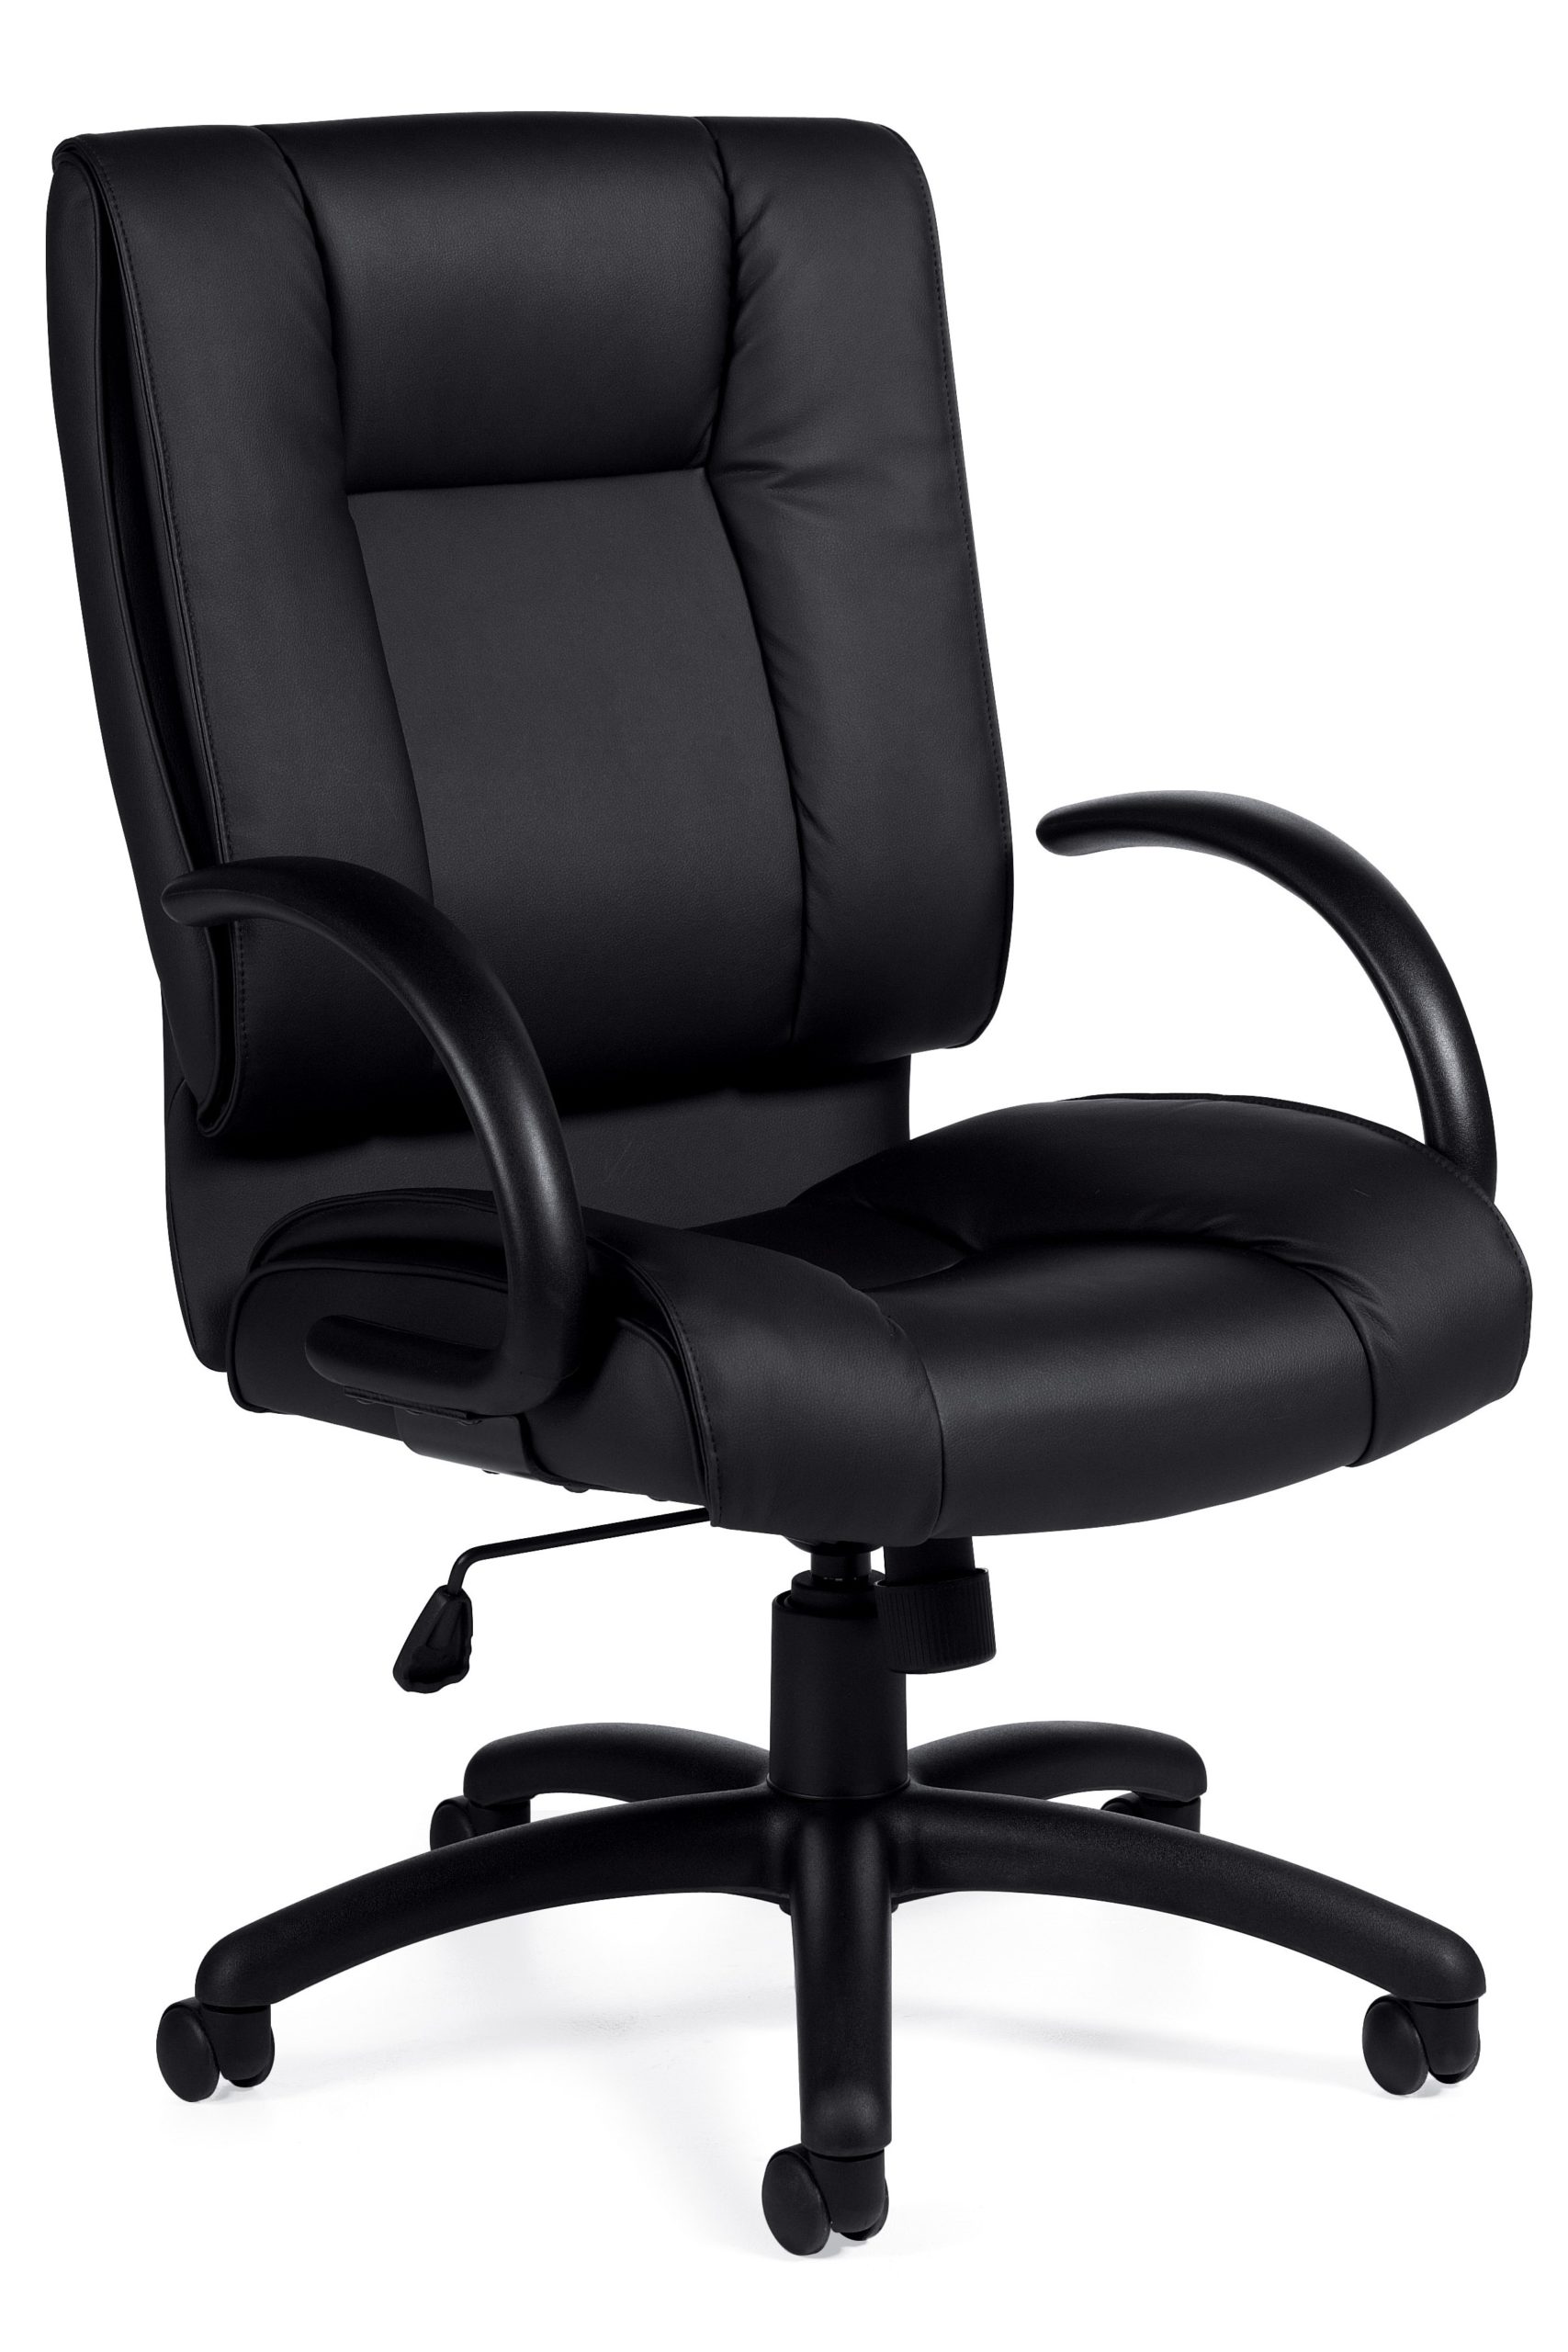 Mid back swivel-tilt conference chair in black Luxhide with nylon 5-star base, tilt lock, half-loop urethane-skinned arms, and tilt tension knob.